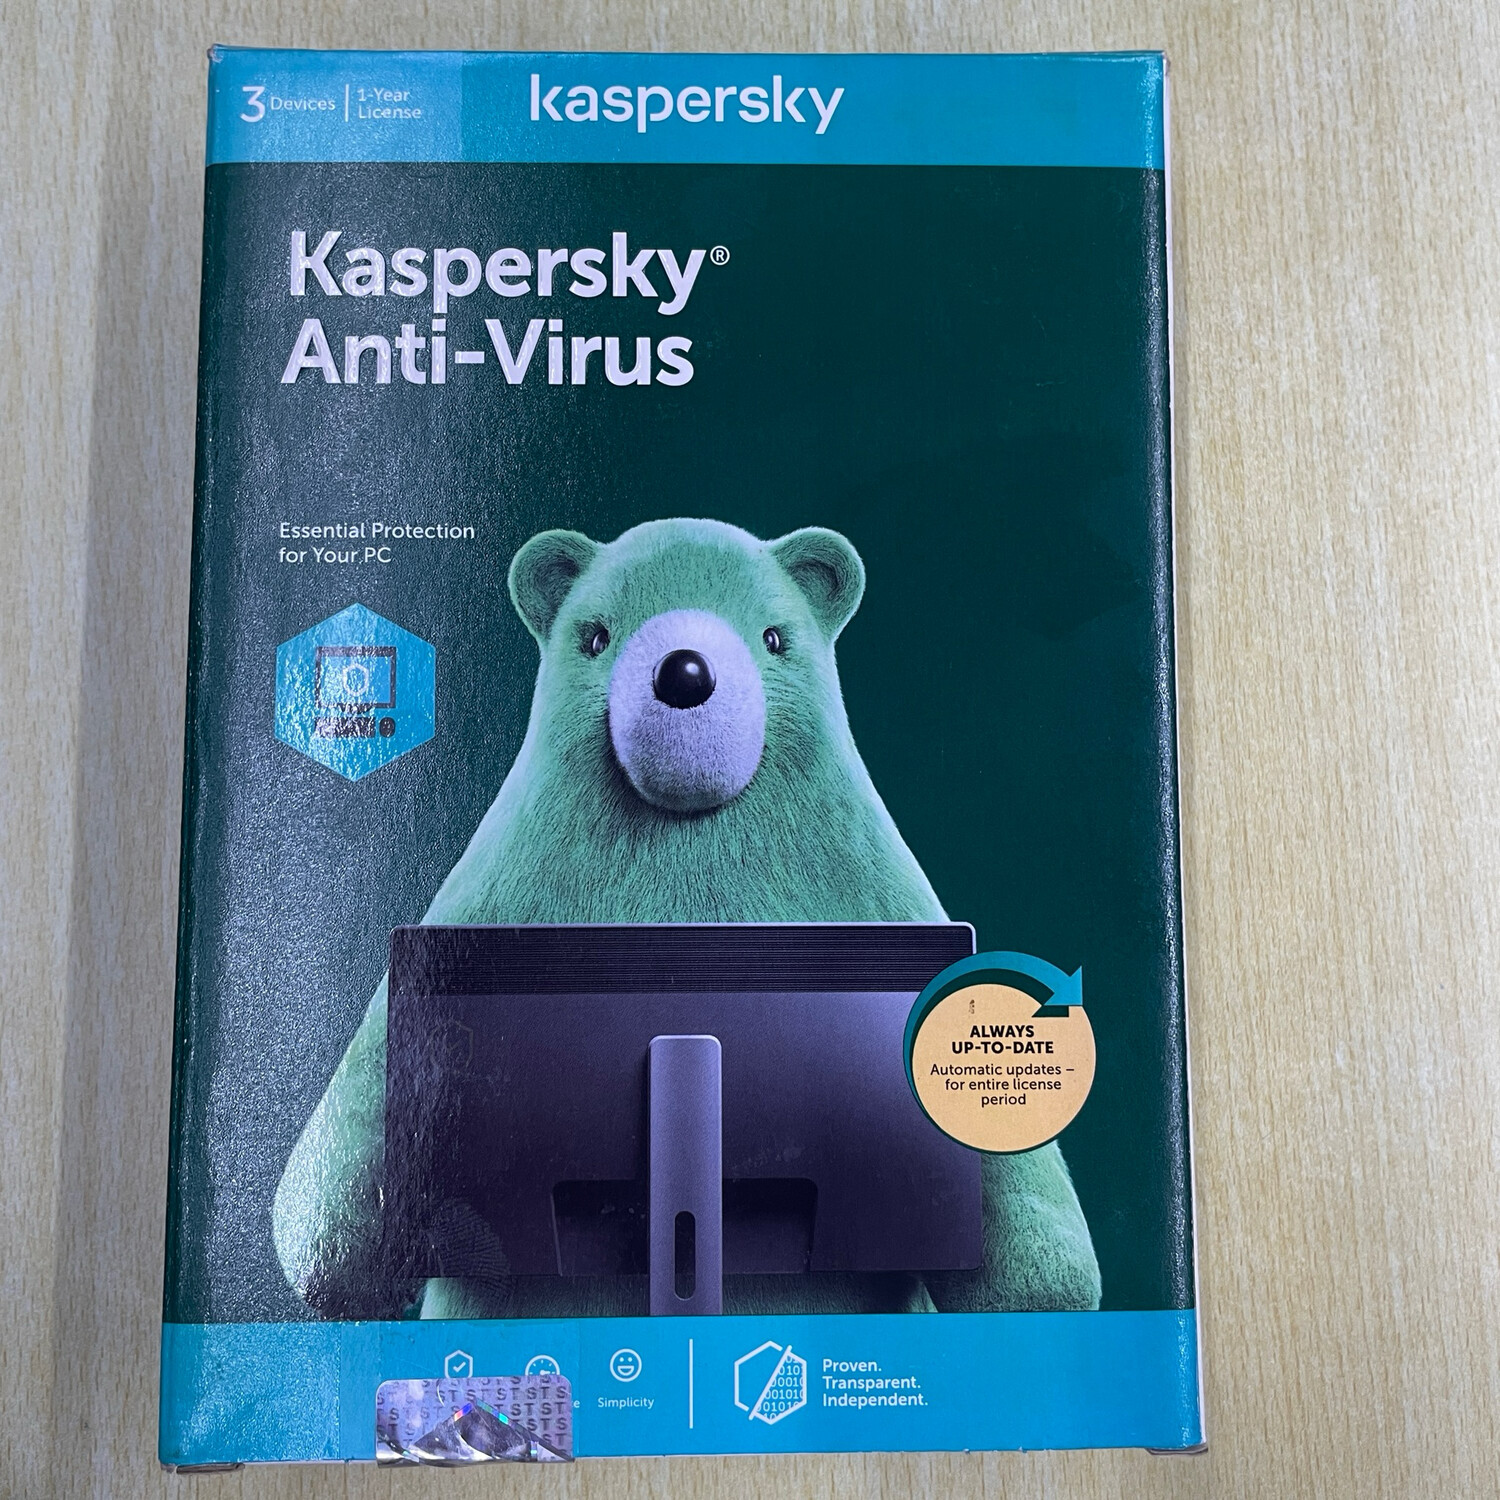 3 User, 1 Year, Kaspersky Antivirus Security